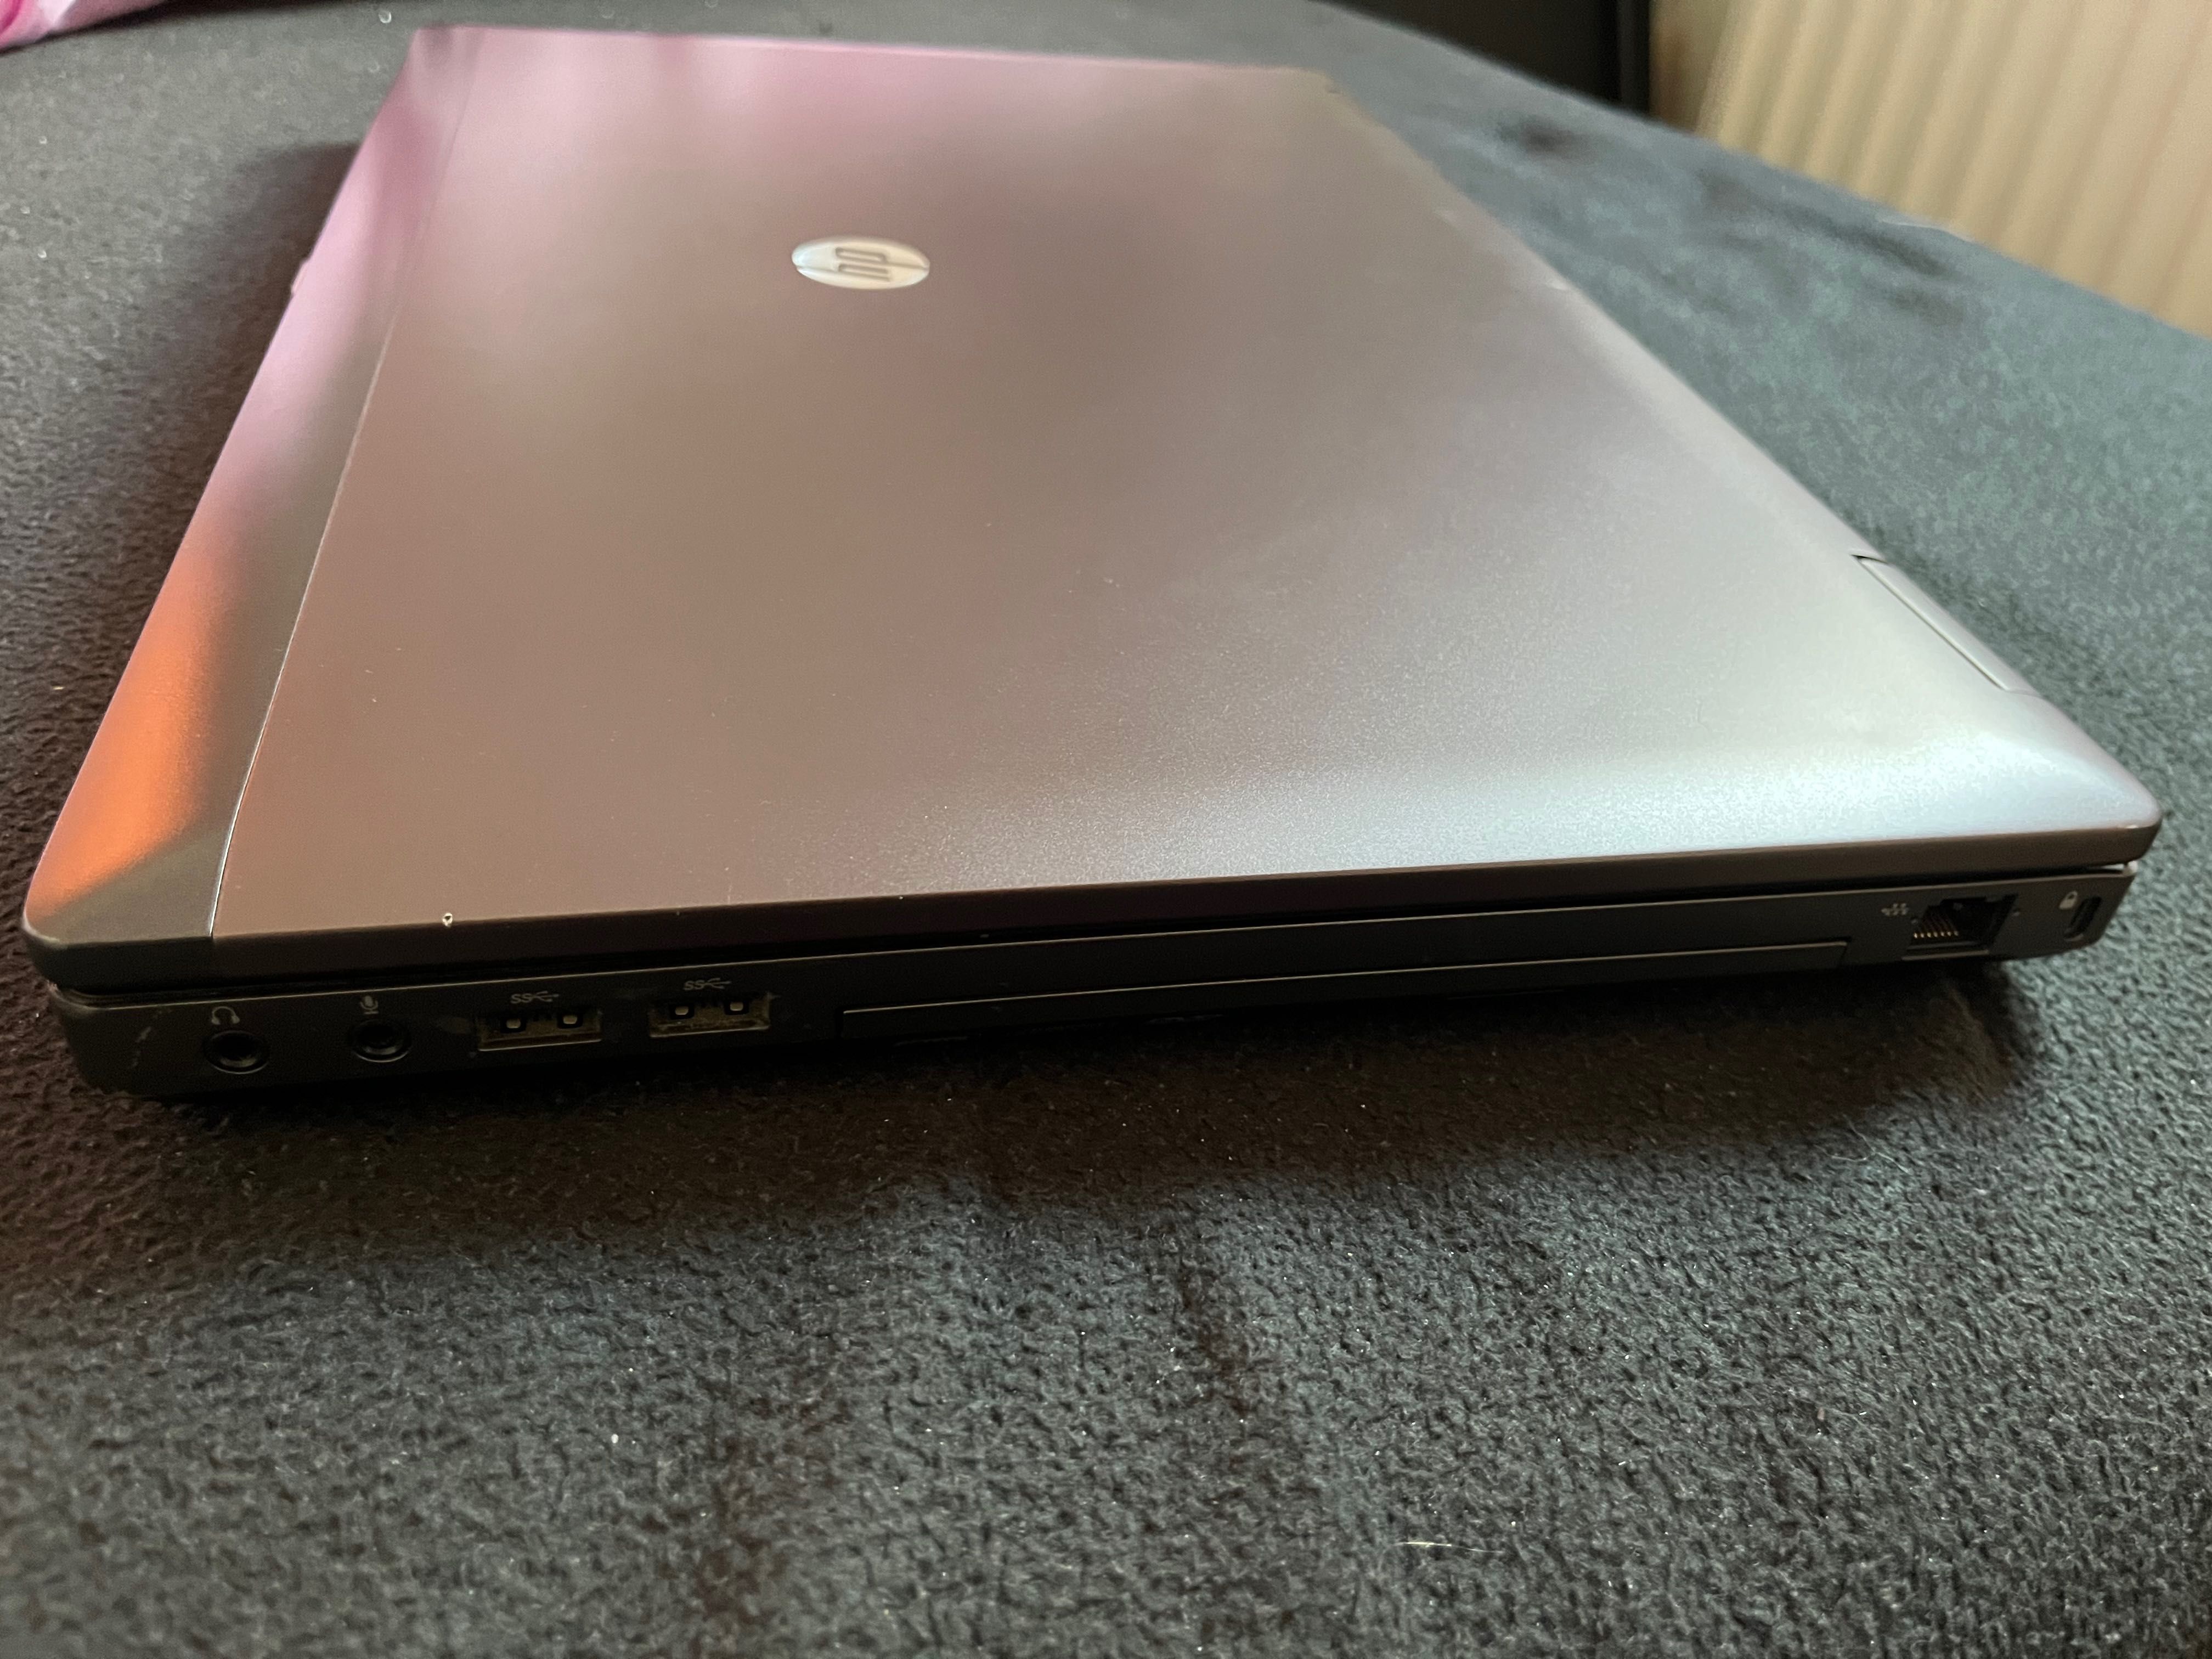 Laptop HP ProBook i5